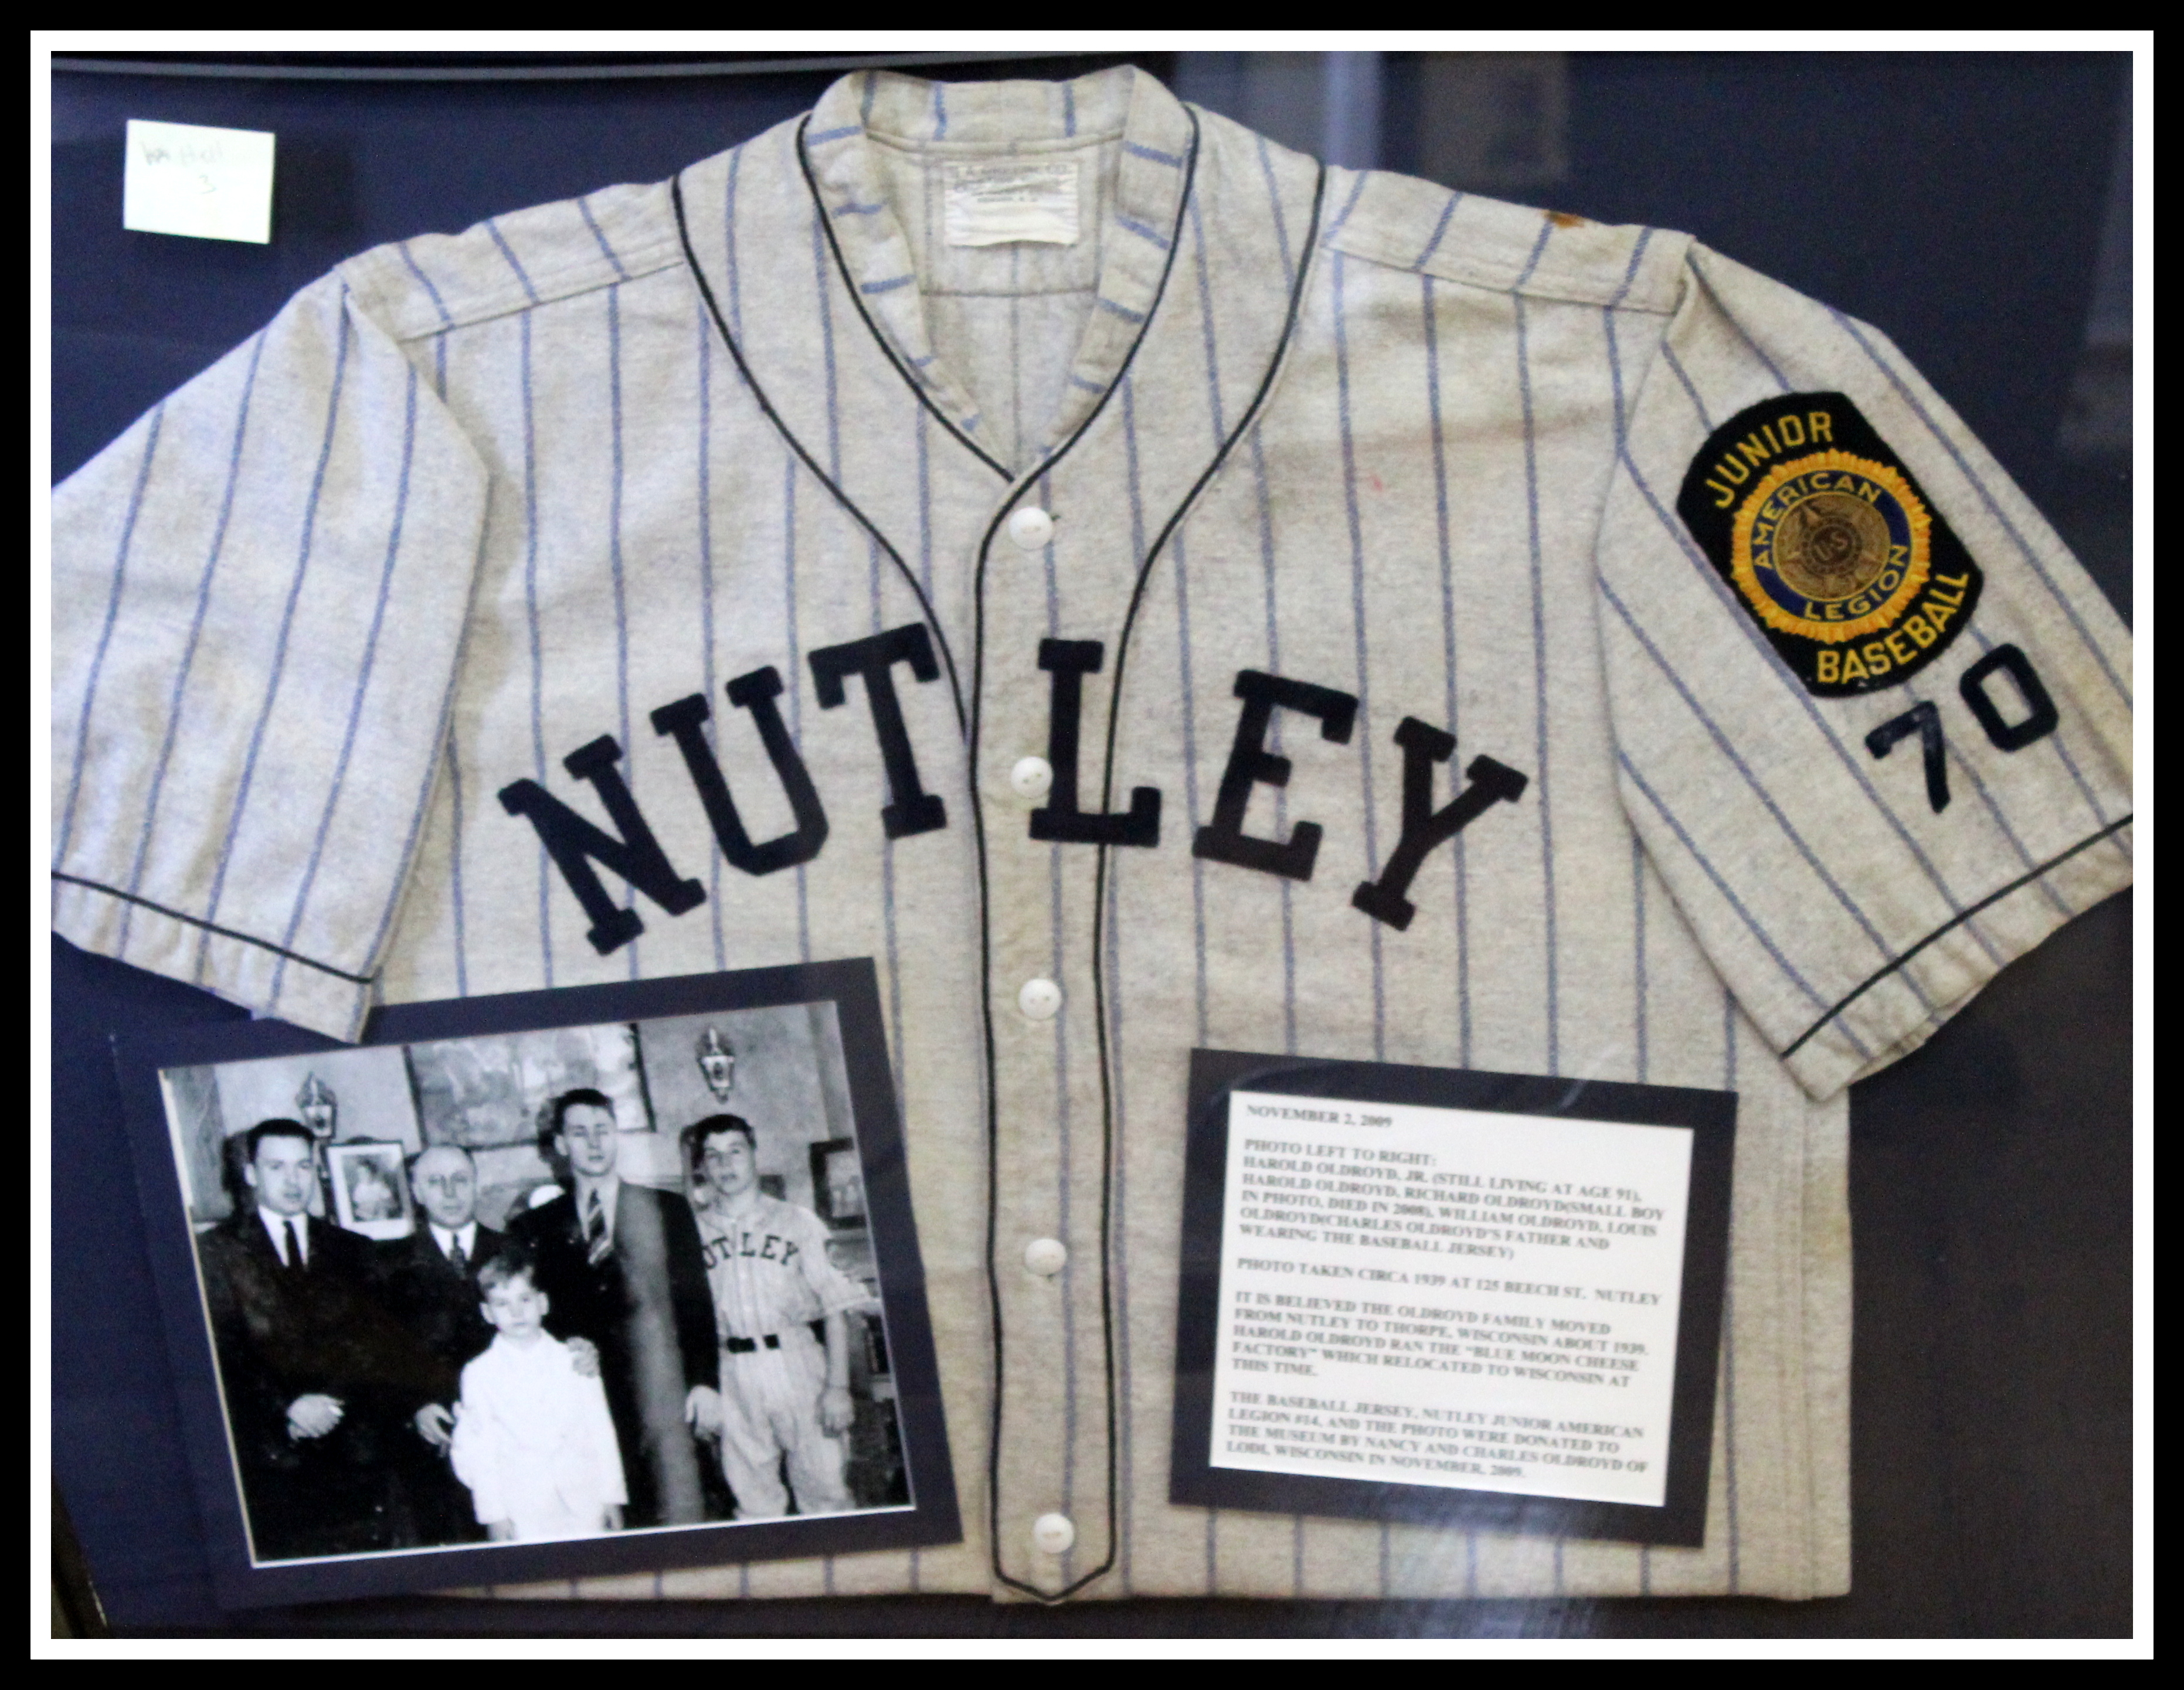 Nutley NJ Museum Exhibit: American Legion Post 70 baseball team shirt